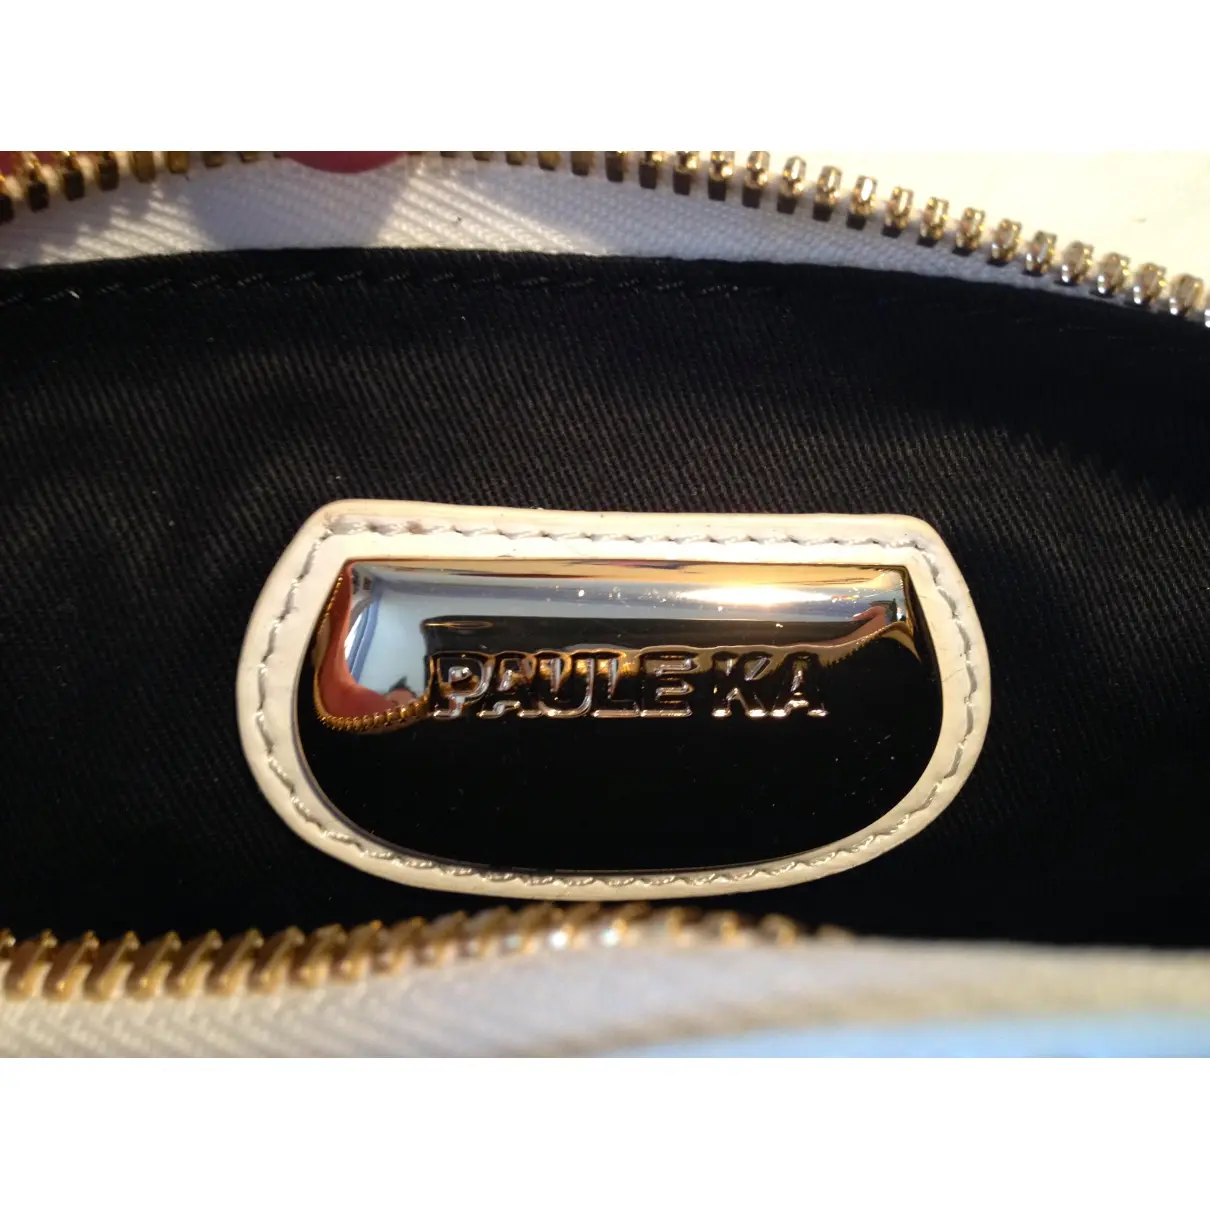 Buy Paule Ka Patent leather clutch bag online